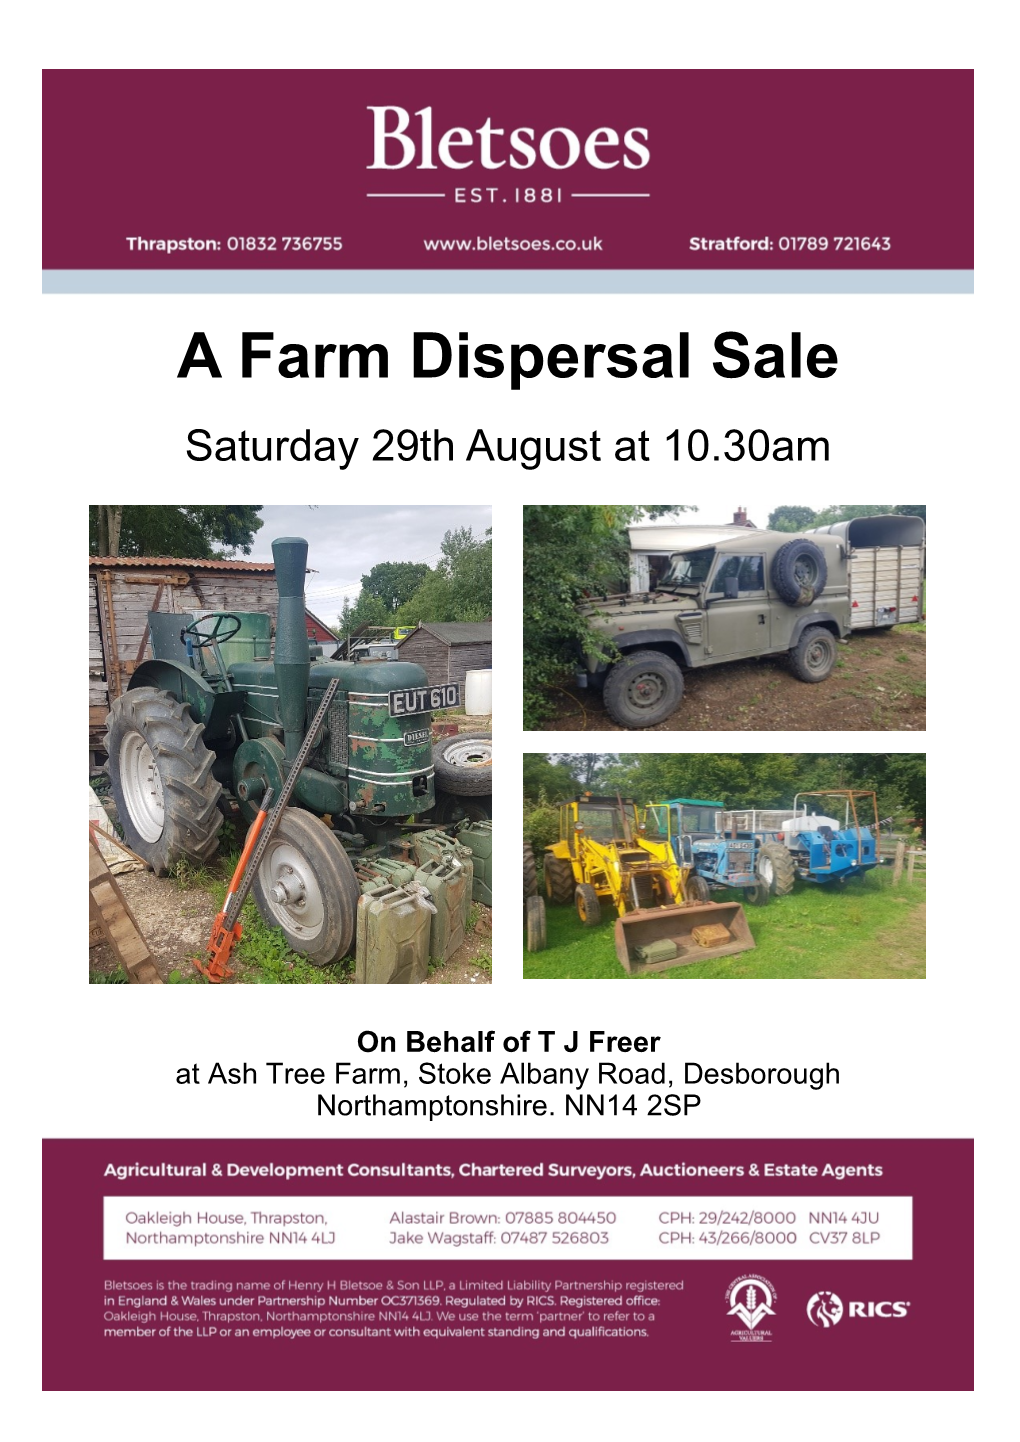 A Farm Dispersal Sale